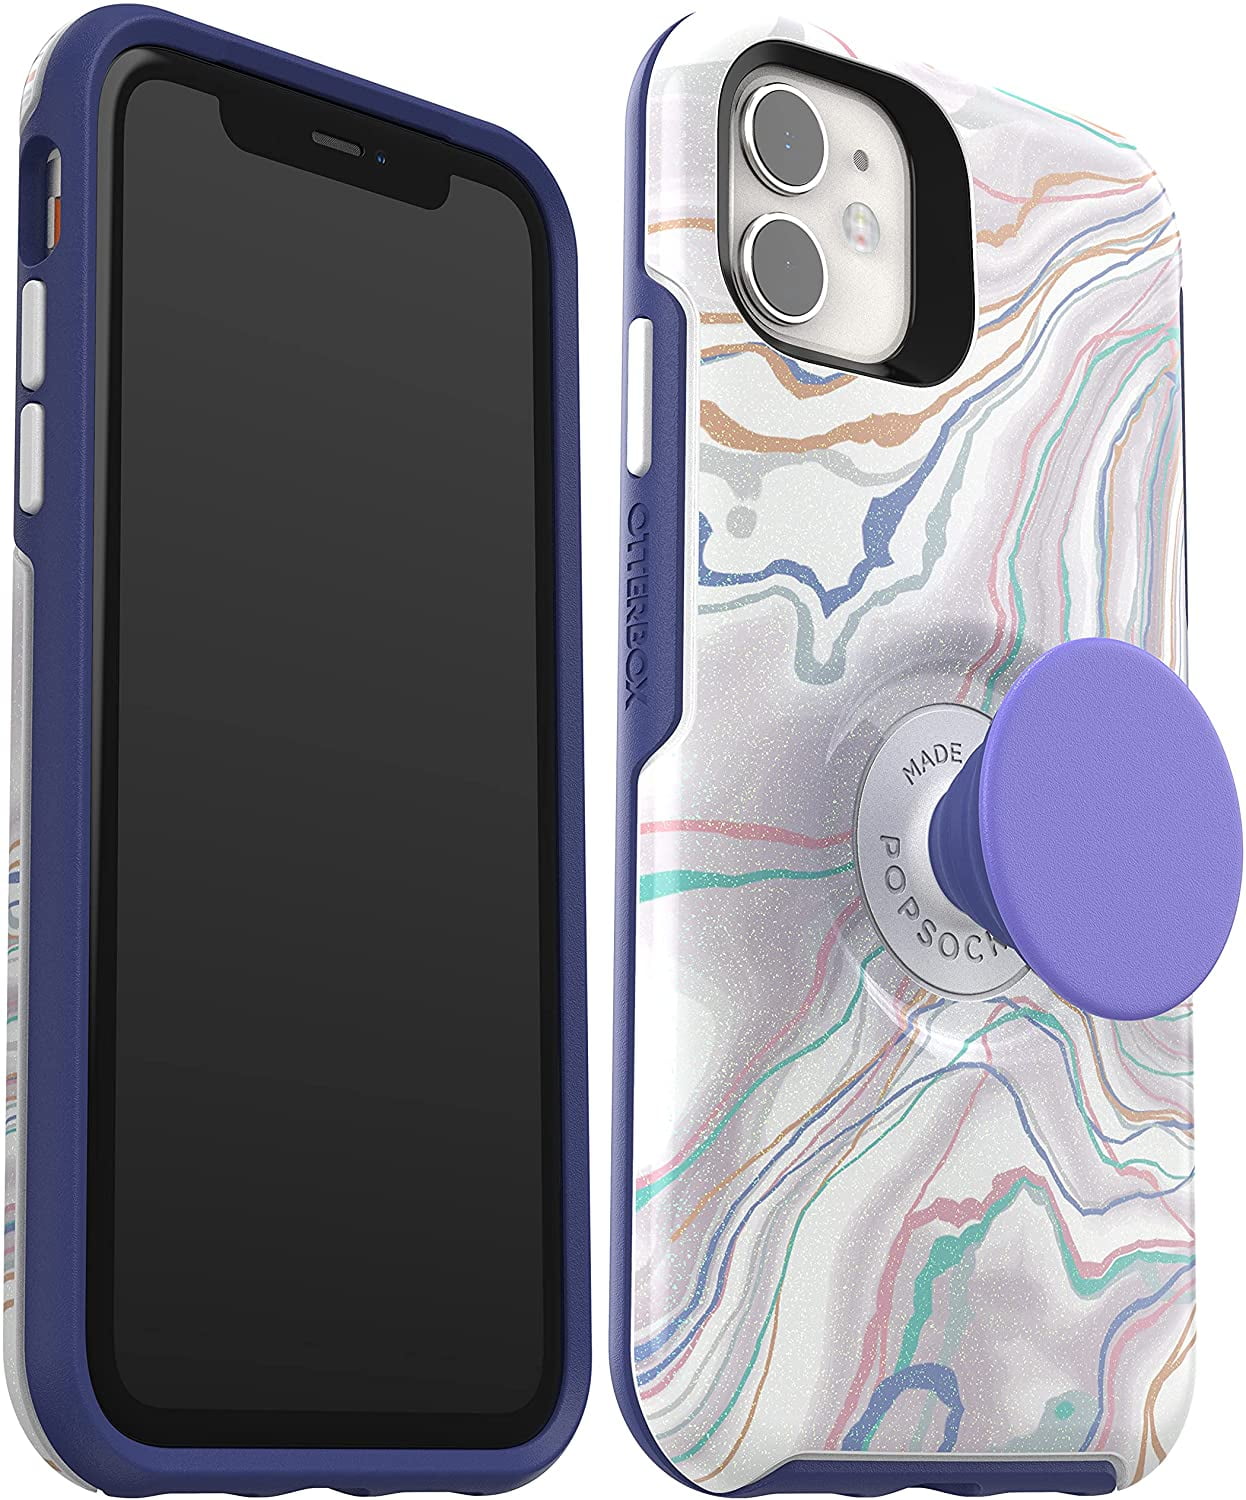 iPhone 11 Pro Case & Pop Socket  Iphone 11 pro case, Iphone 11